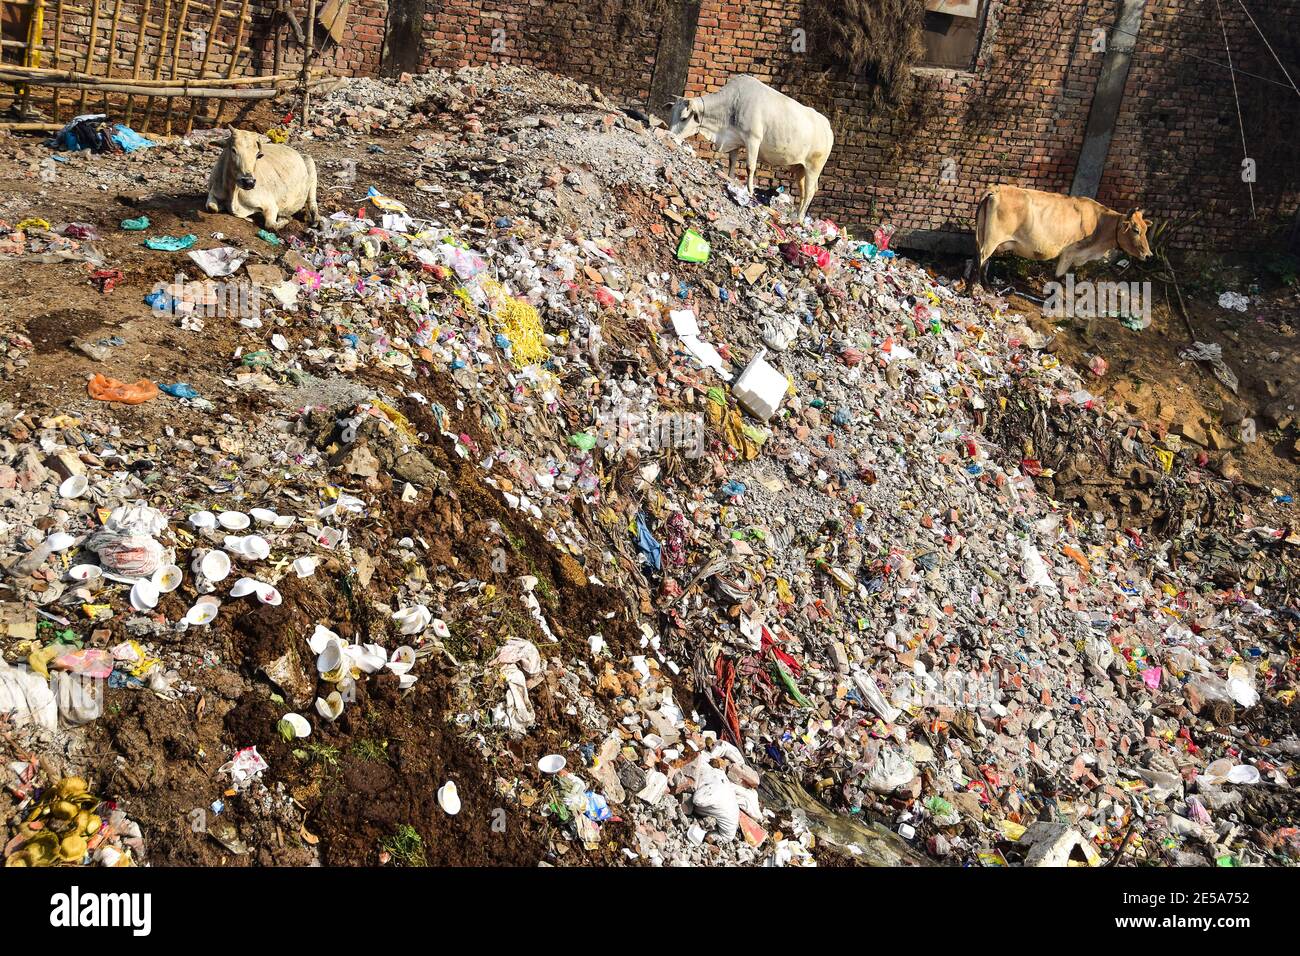 Sacred cows in rubbish tip, Ghats, Varanasi, India Stock Photo